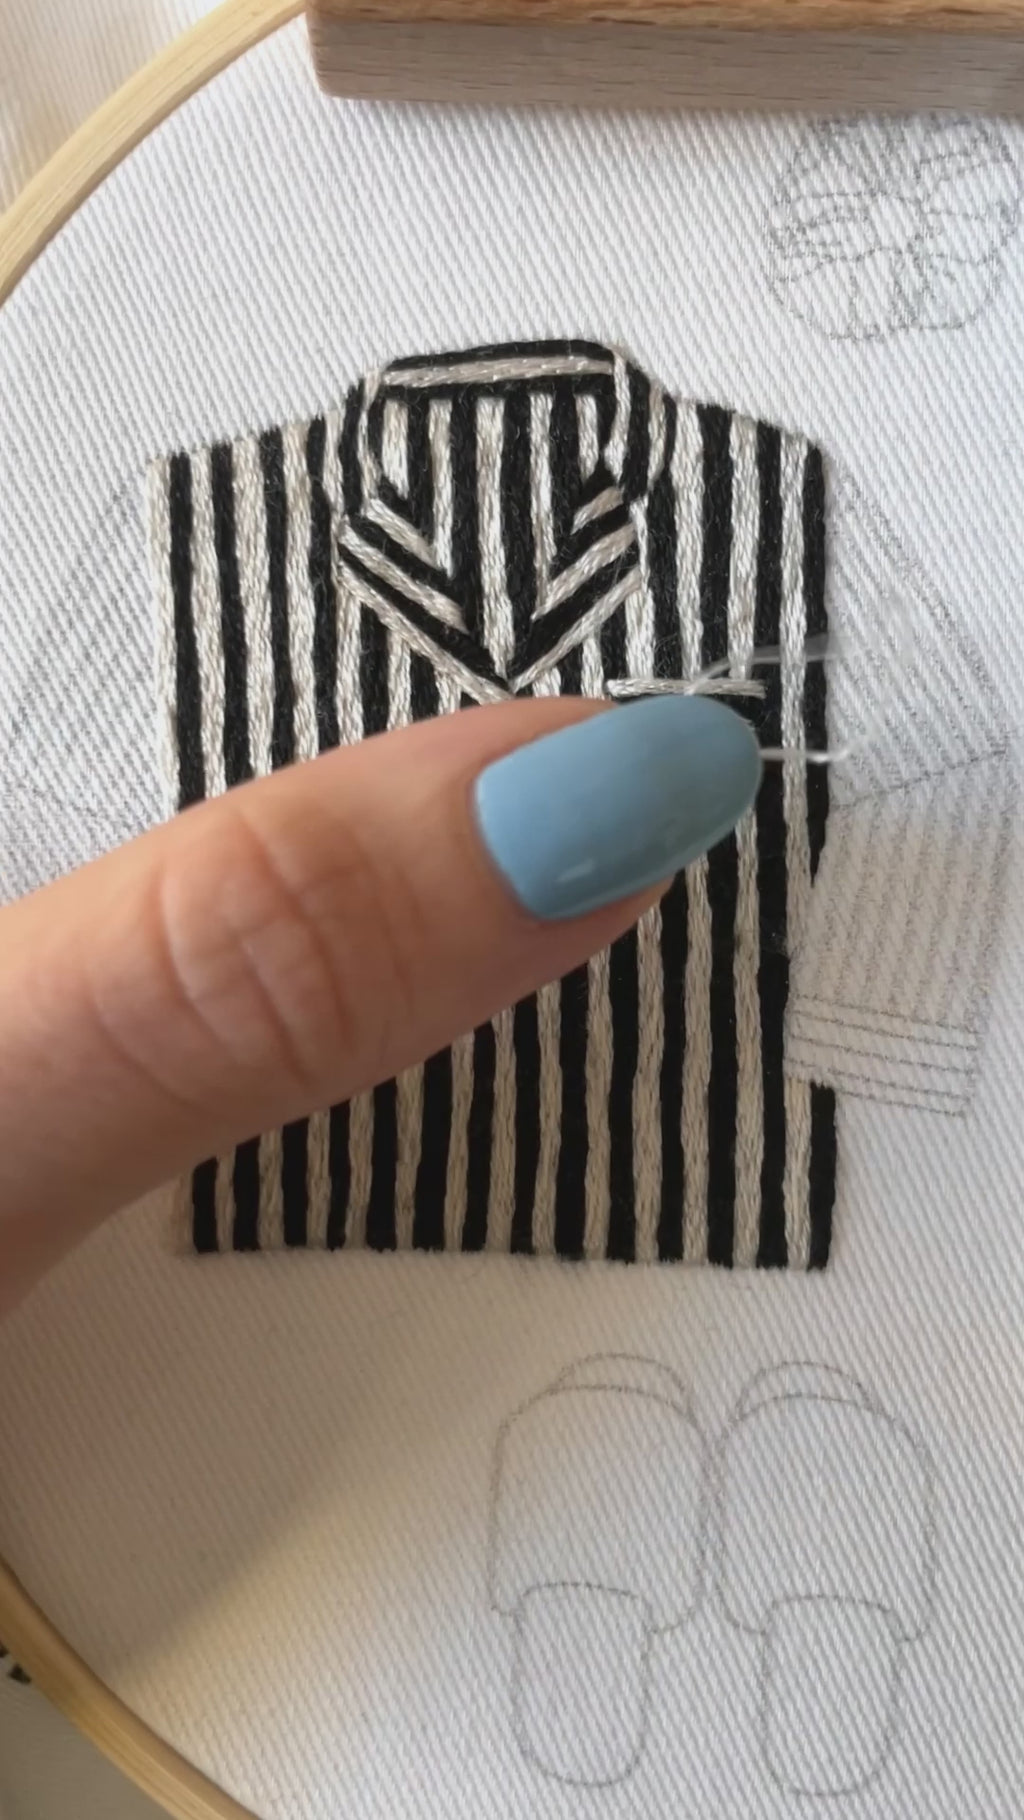 Stitching pajama set embroidery pattern by kdornbier